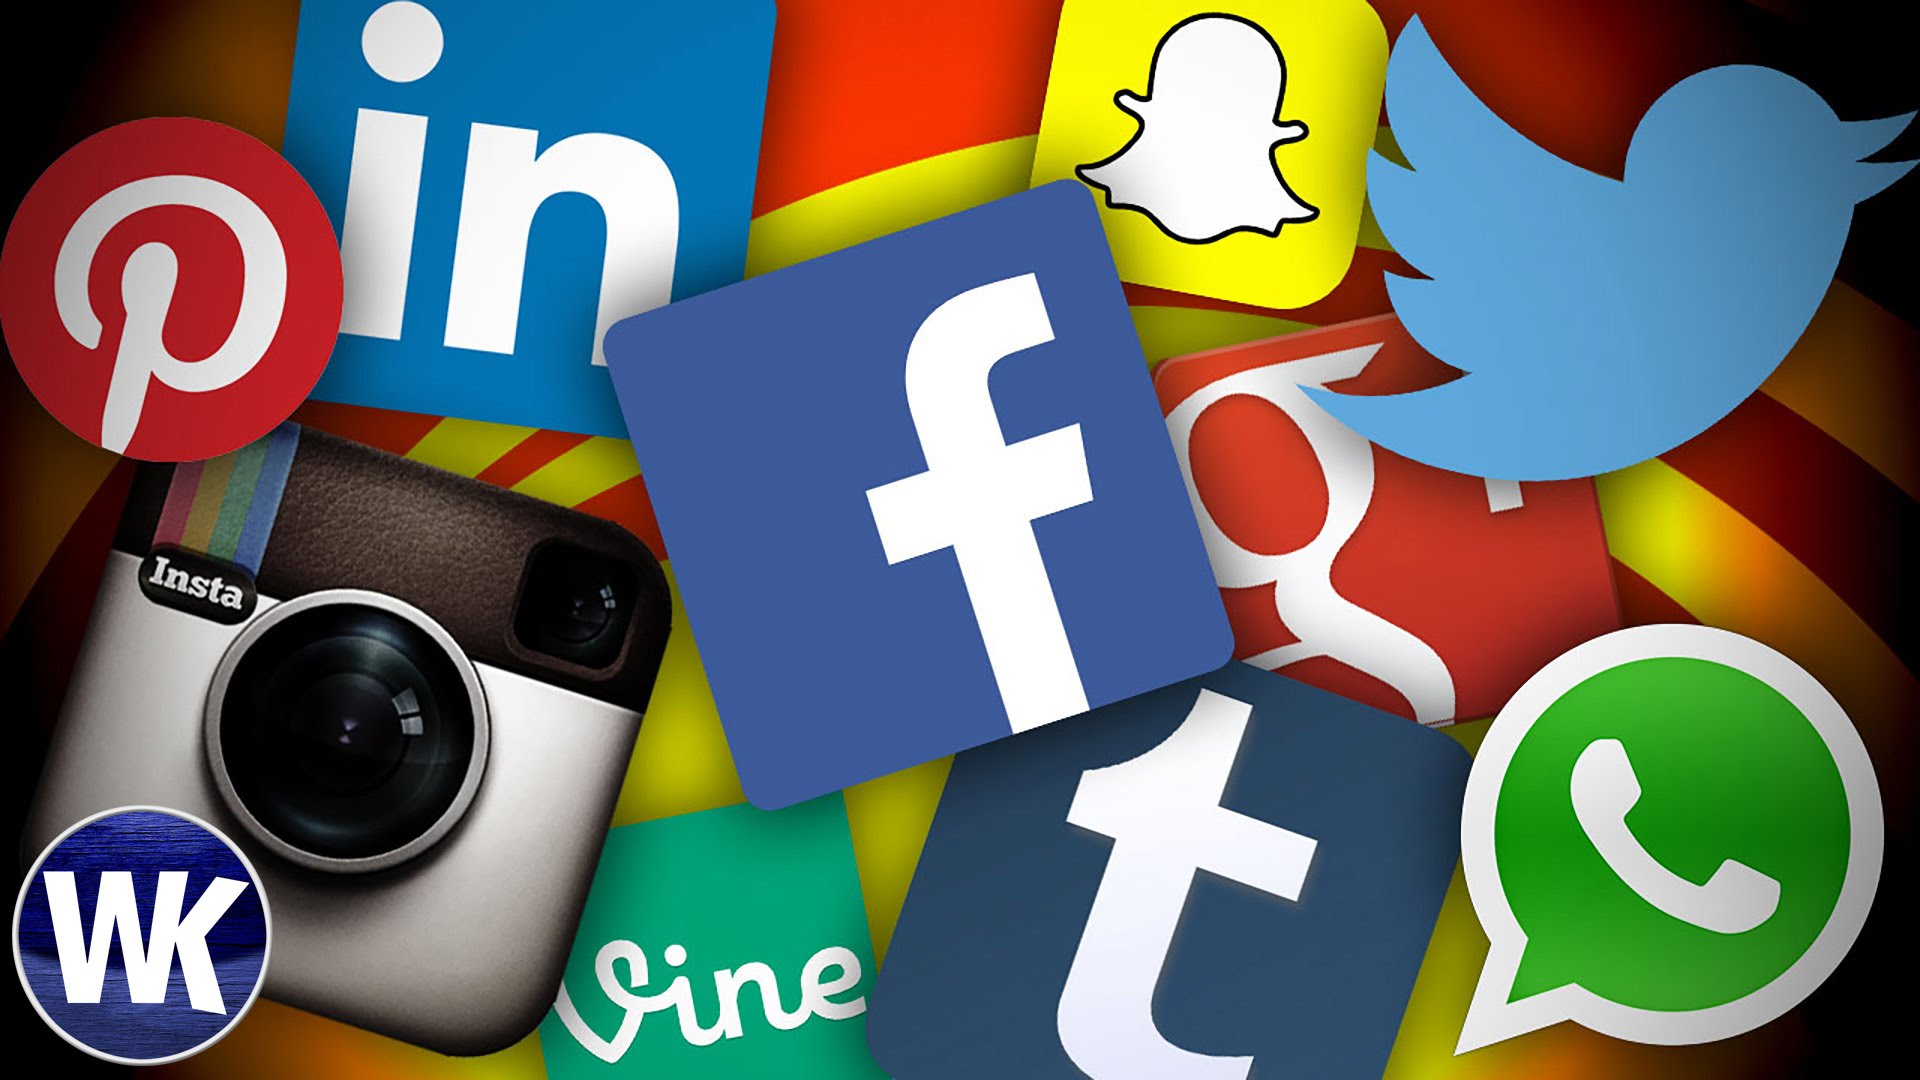 Social Network Wallpaper - Popular Social Media Sites - HD Wallpaper 